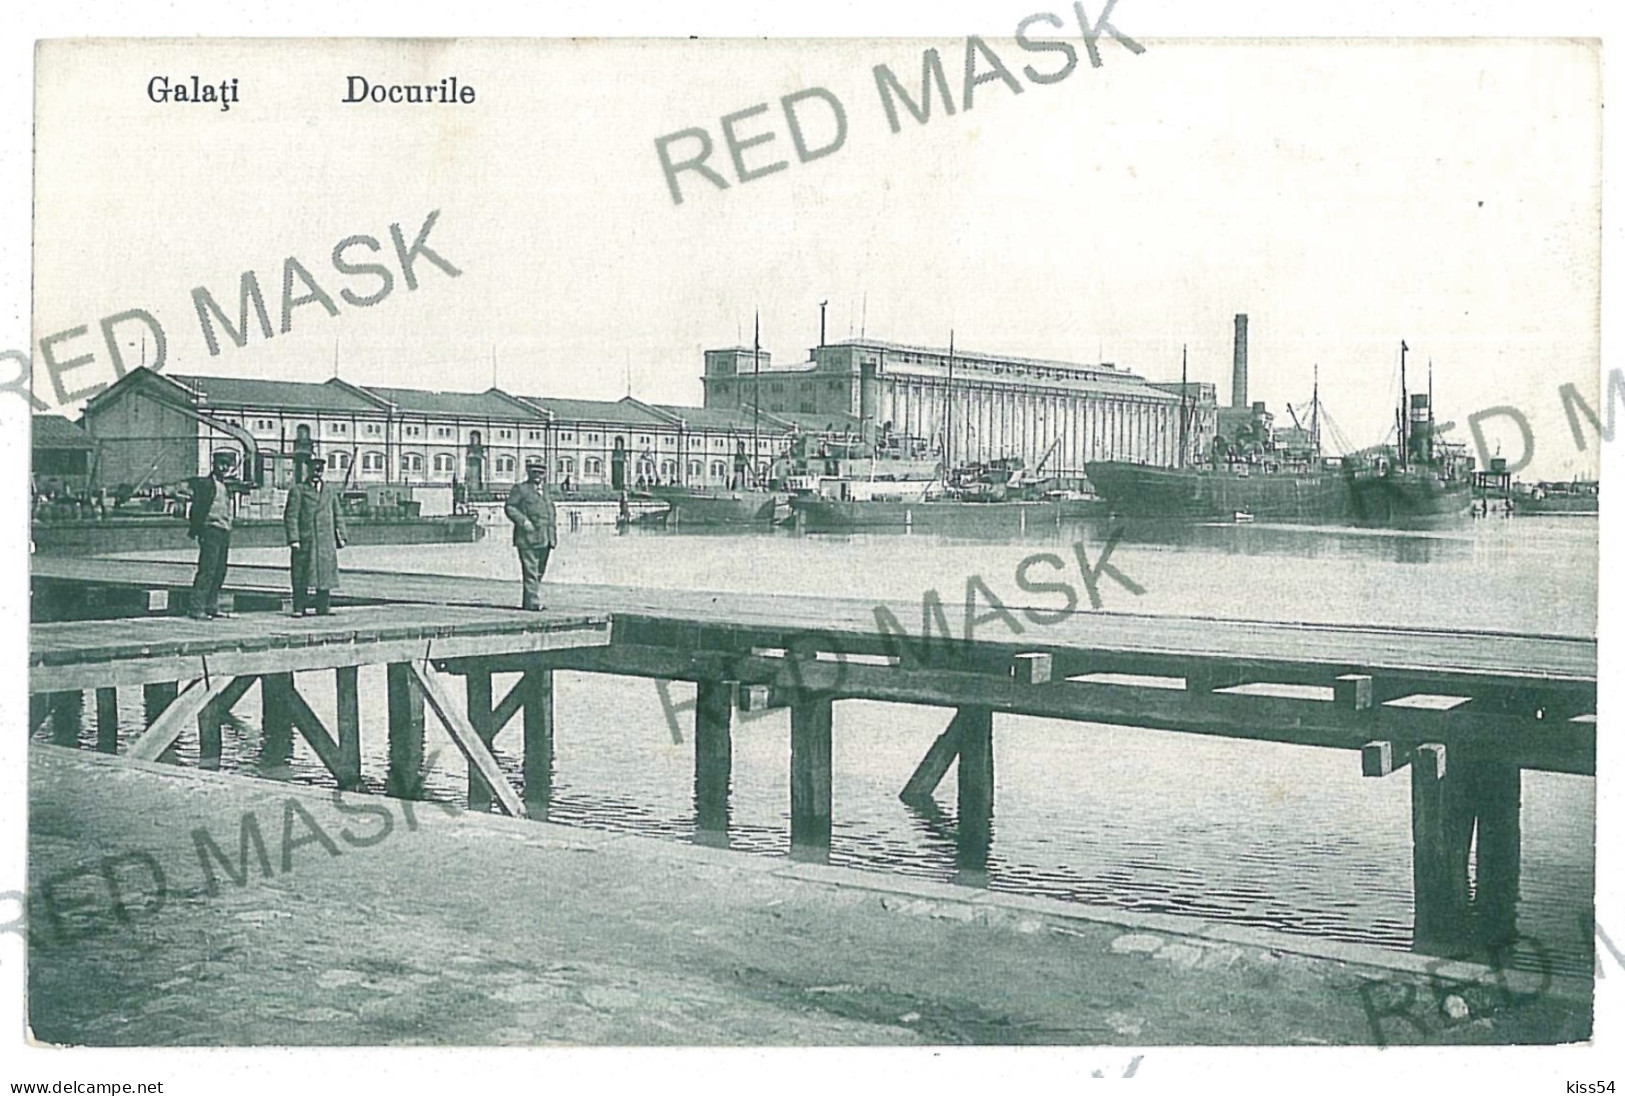 RO 84 - 11692 GALATI, Docurile, Romania - Old Postcard - Unused - Roumanie